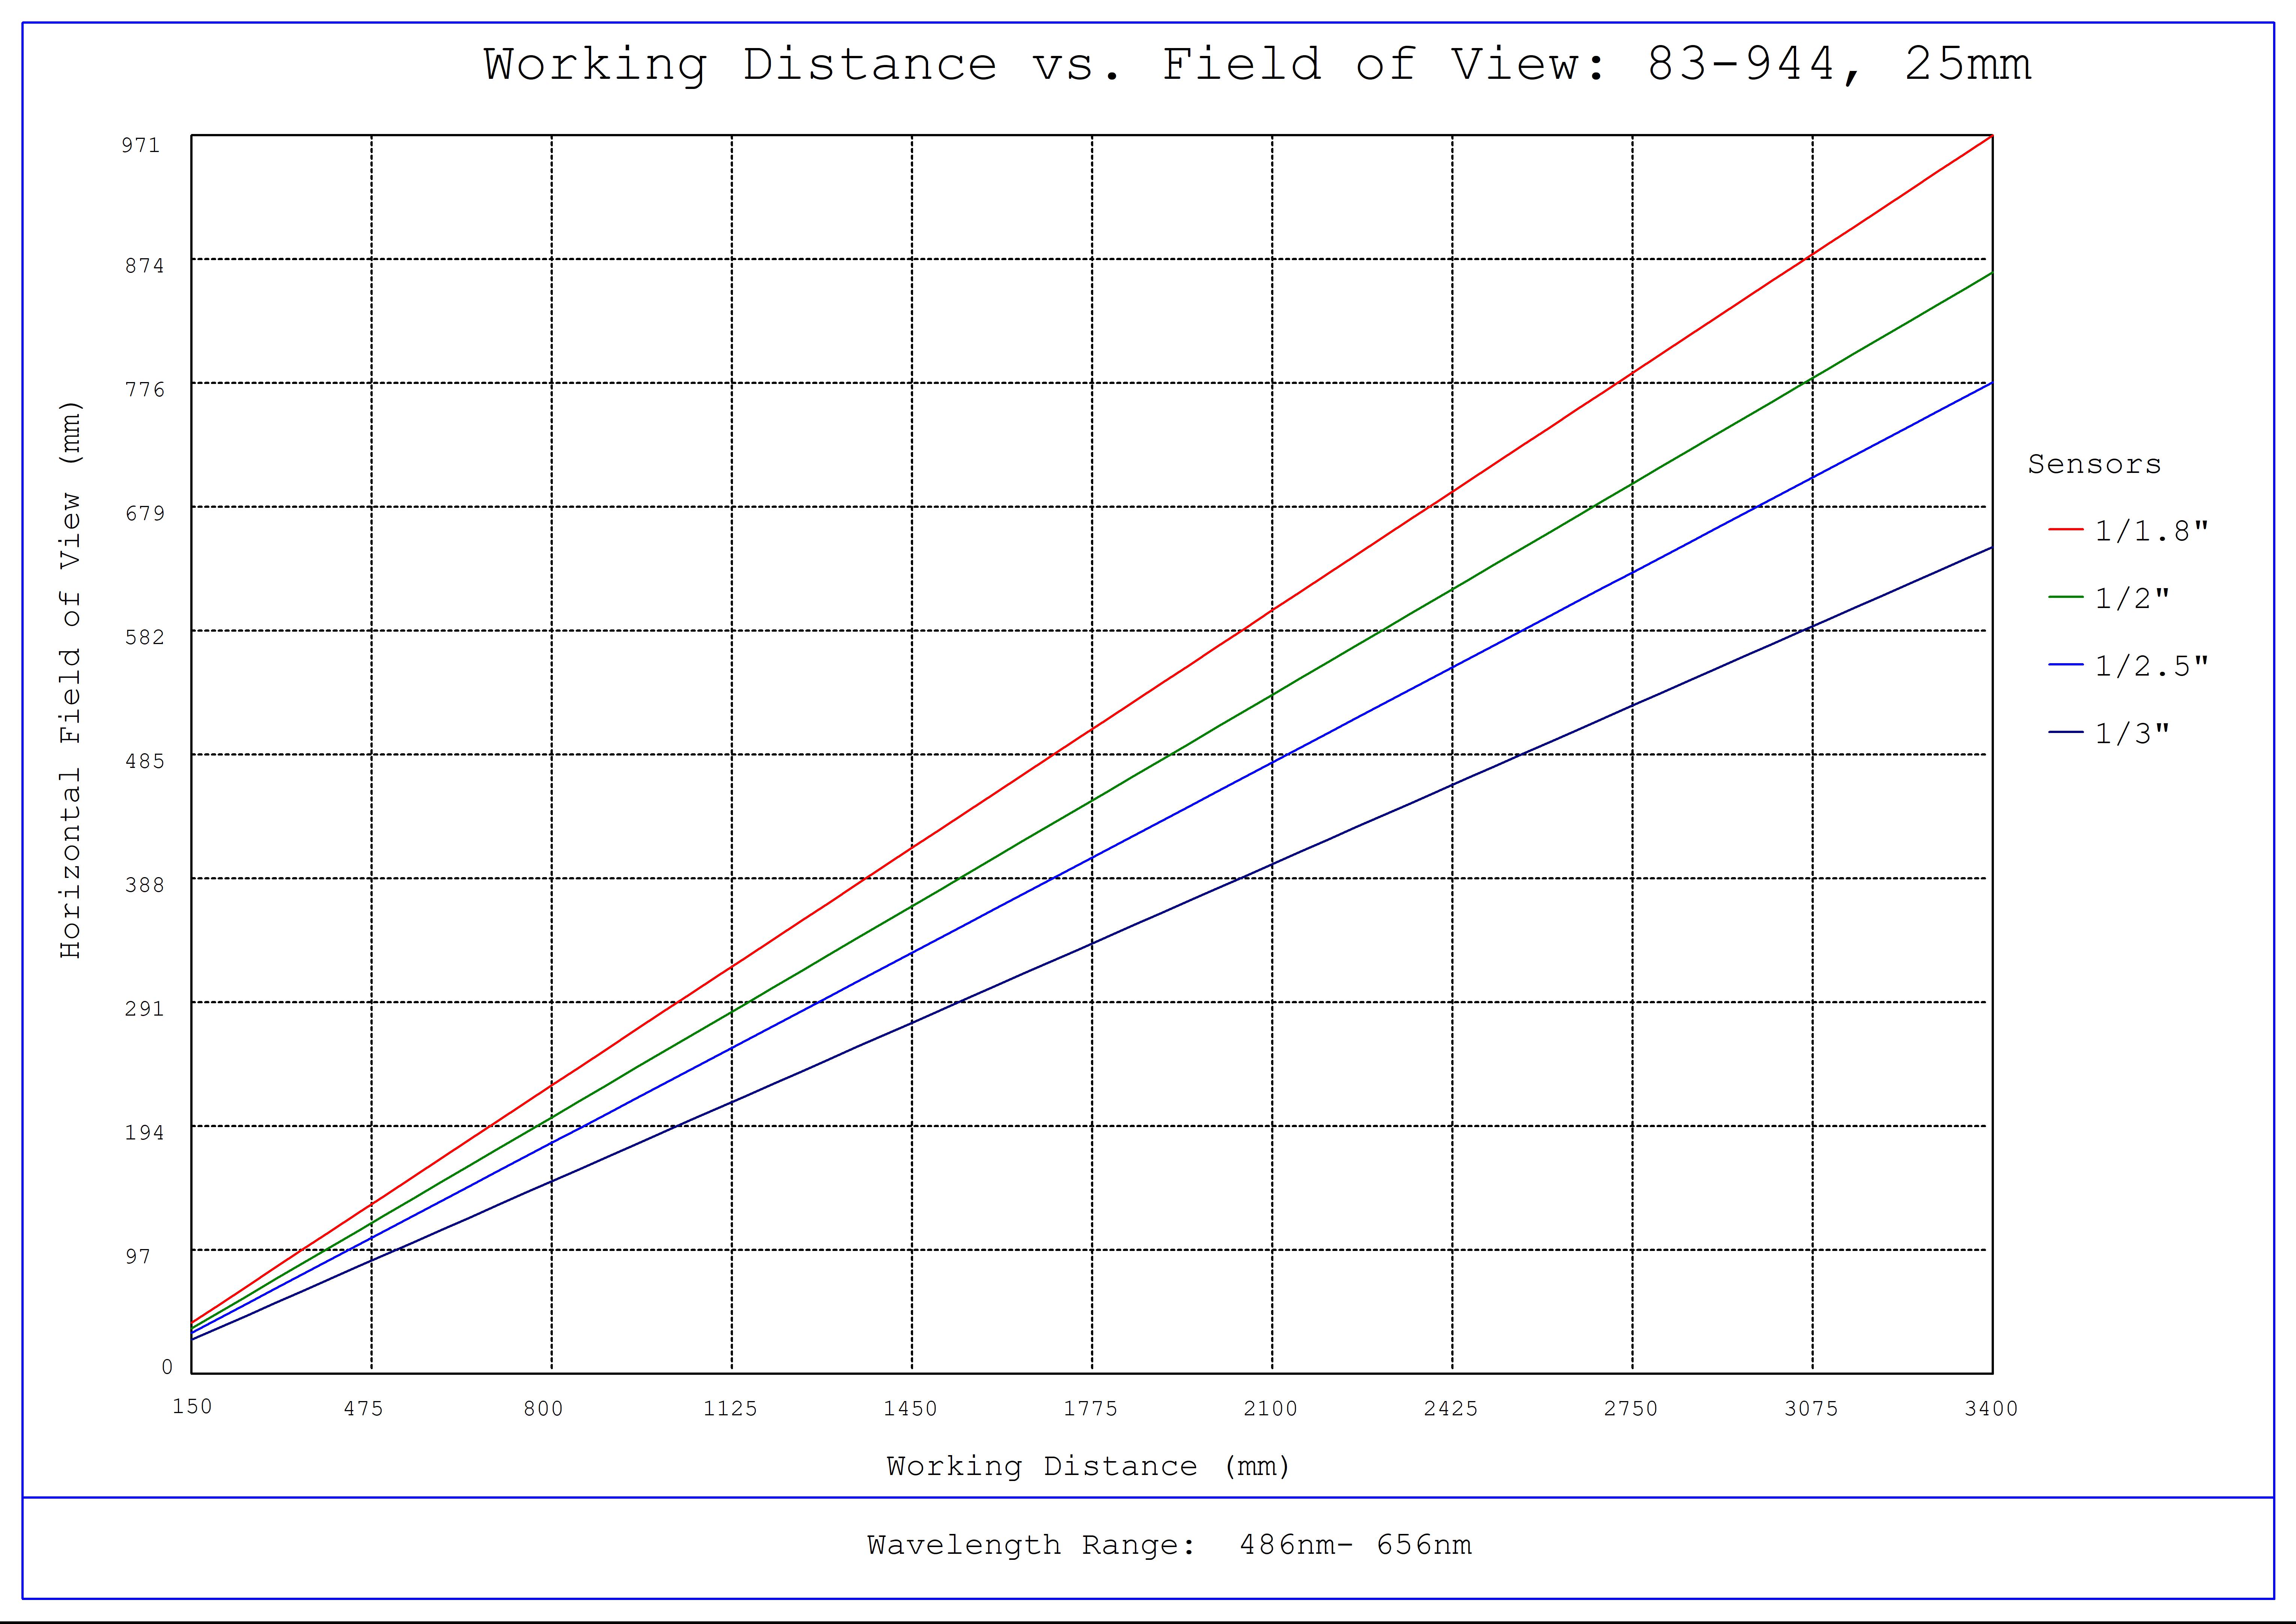 #83-944, 25mm FL f/5.6, Blue Series M12 Lens, Working Distance versus Field of View Plot